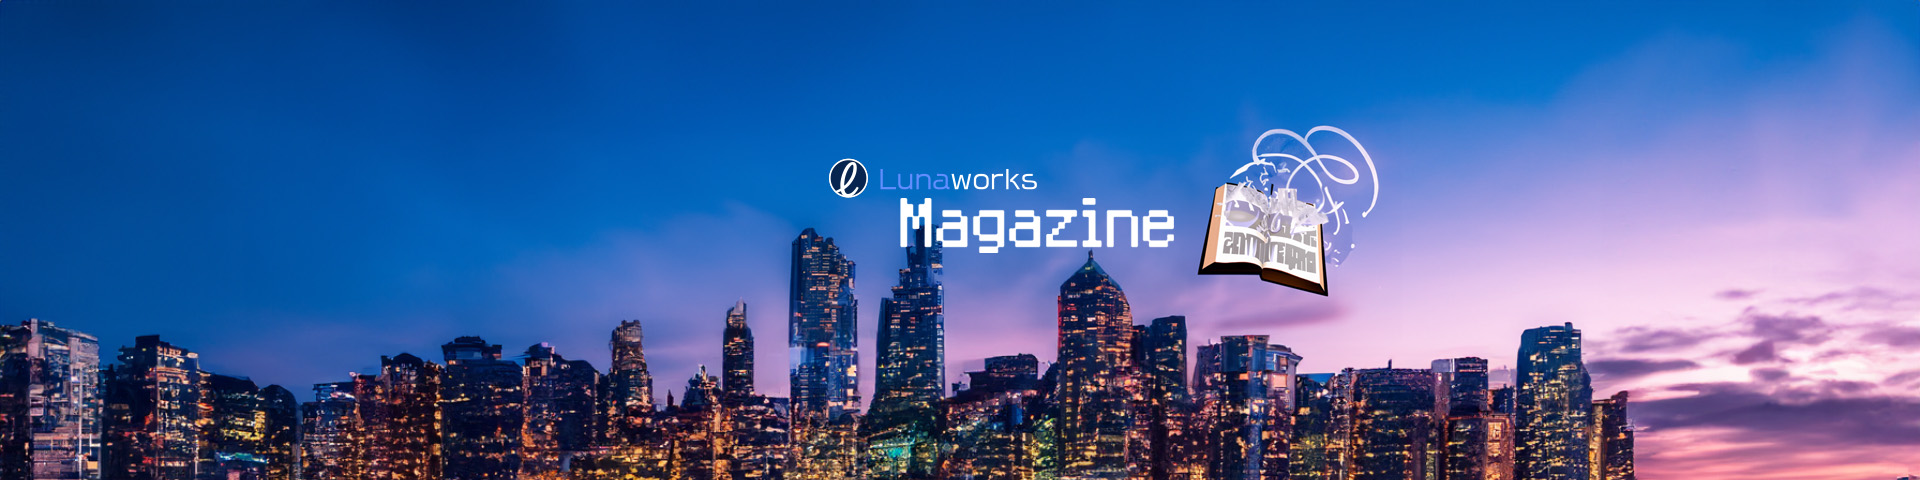 Lunaworks Magazine